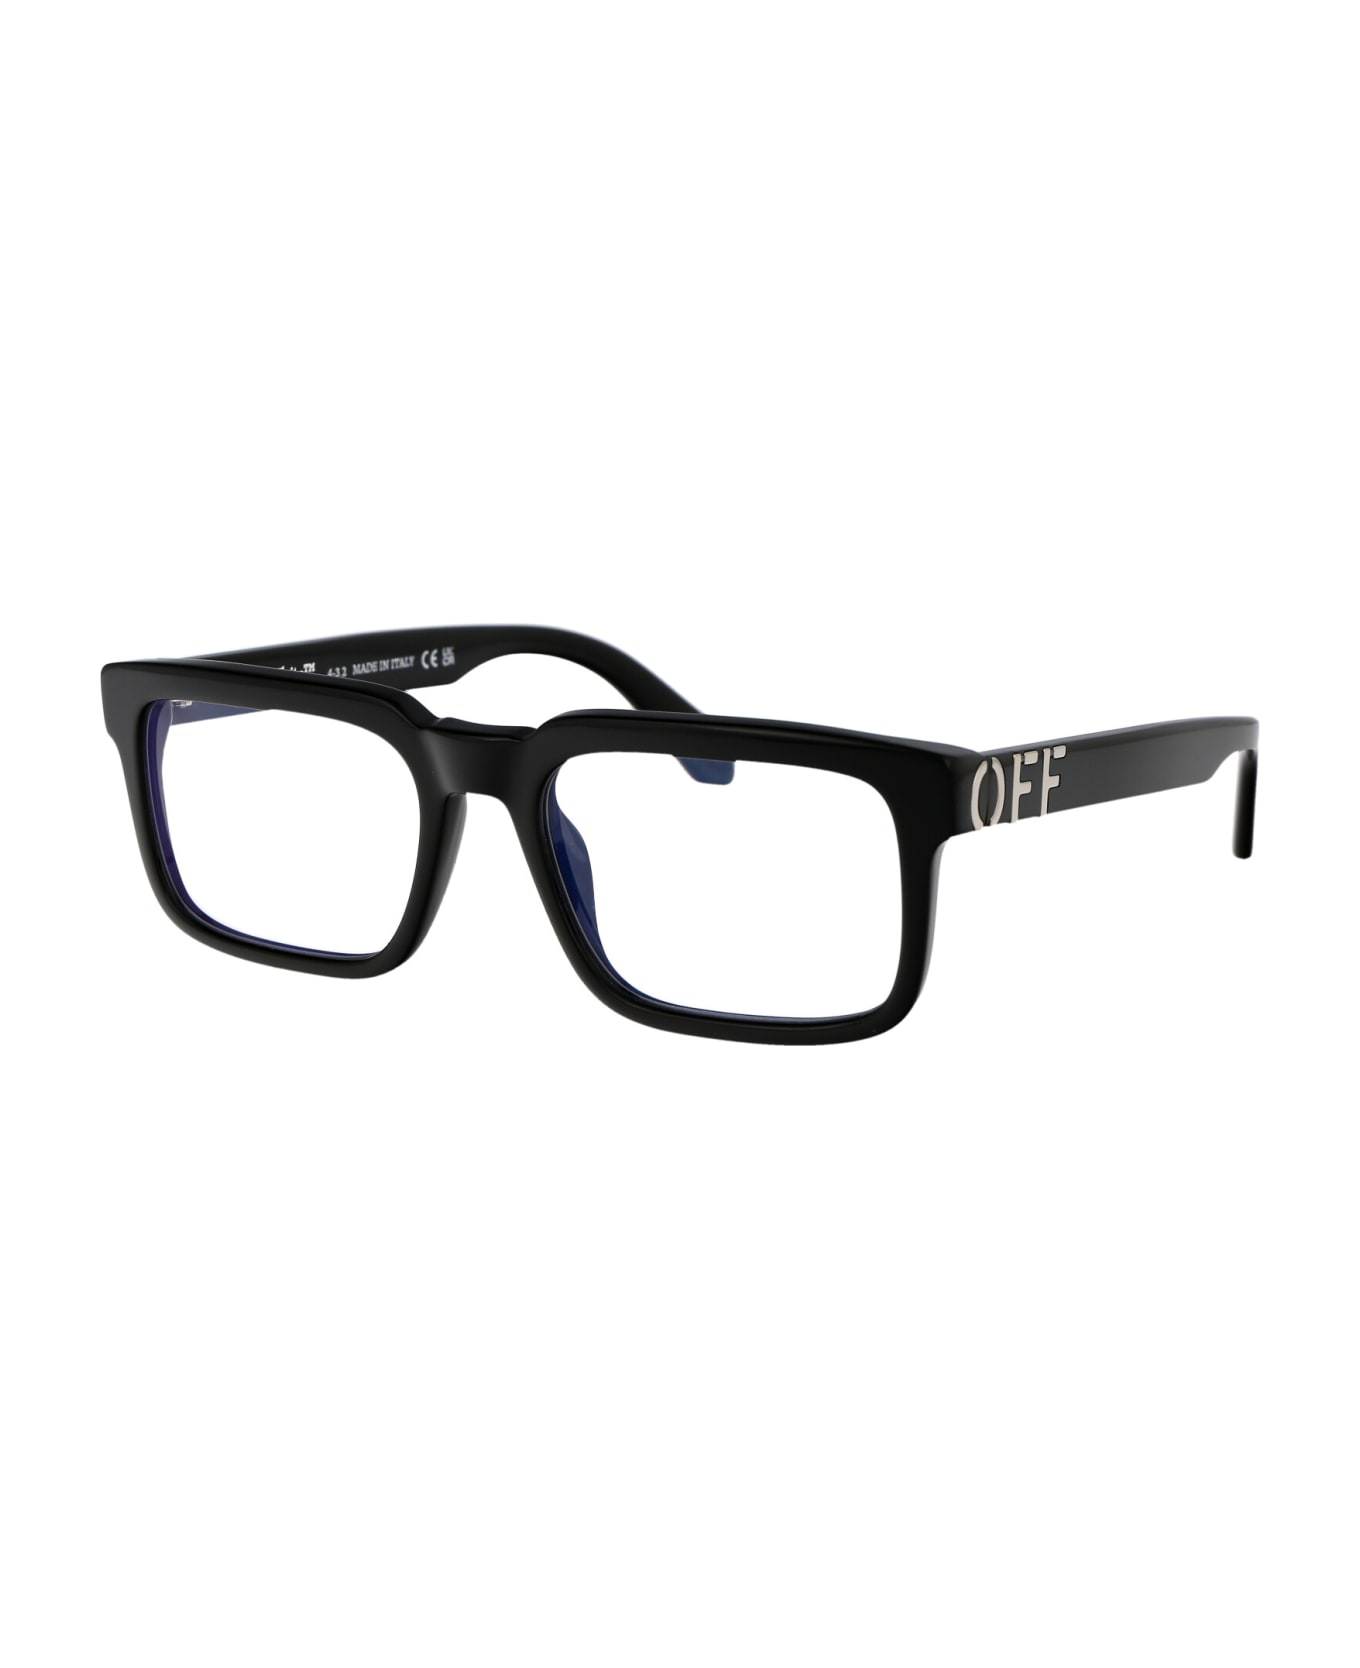 Off-White Optical Style 70 Glasses - 1000 BLACK